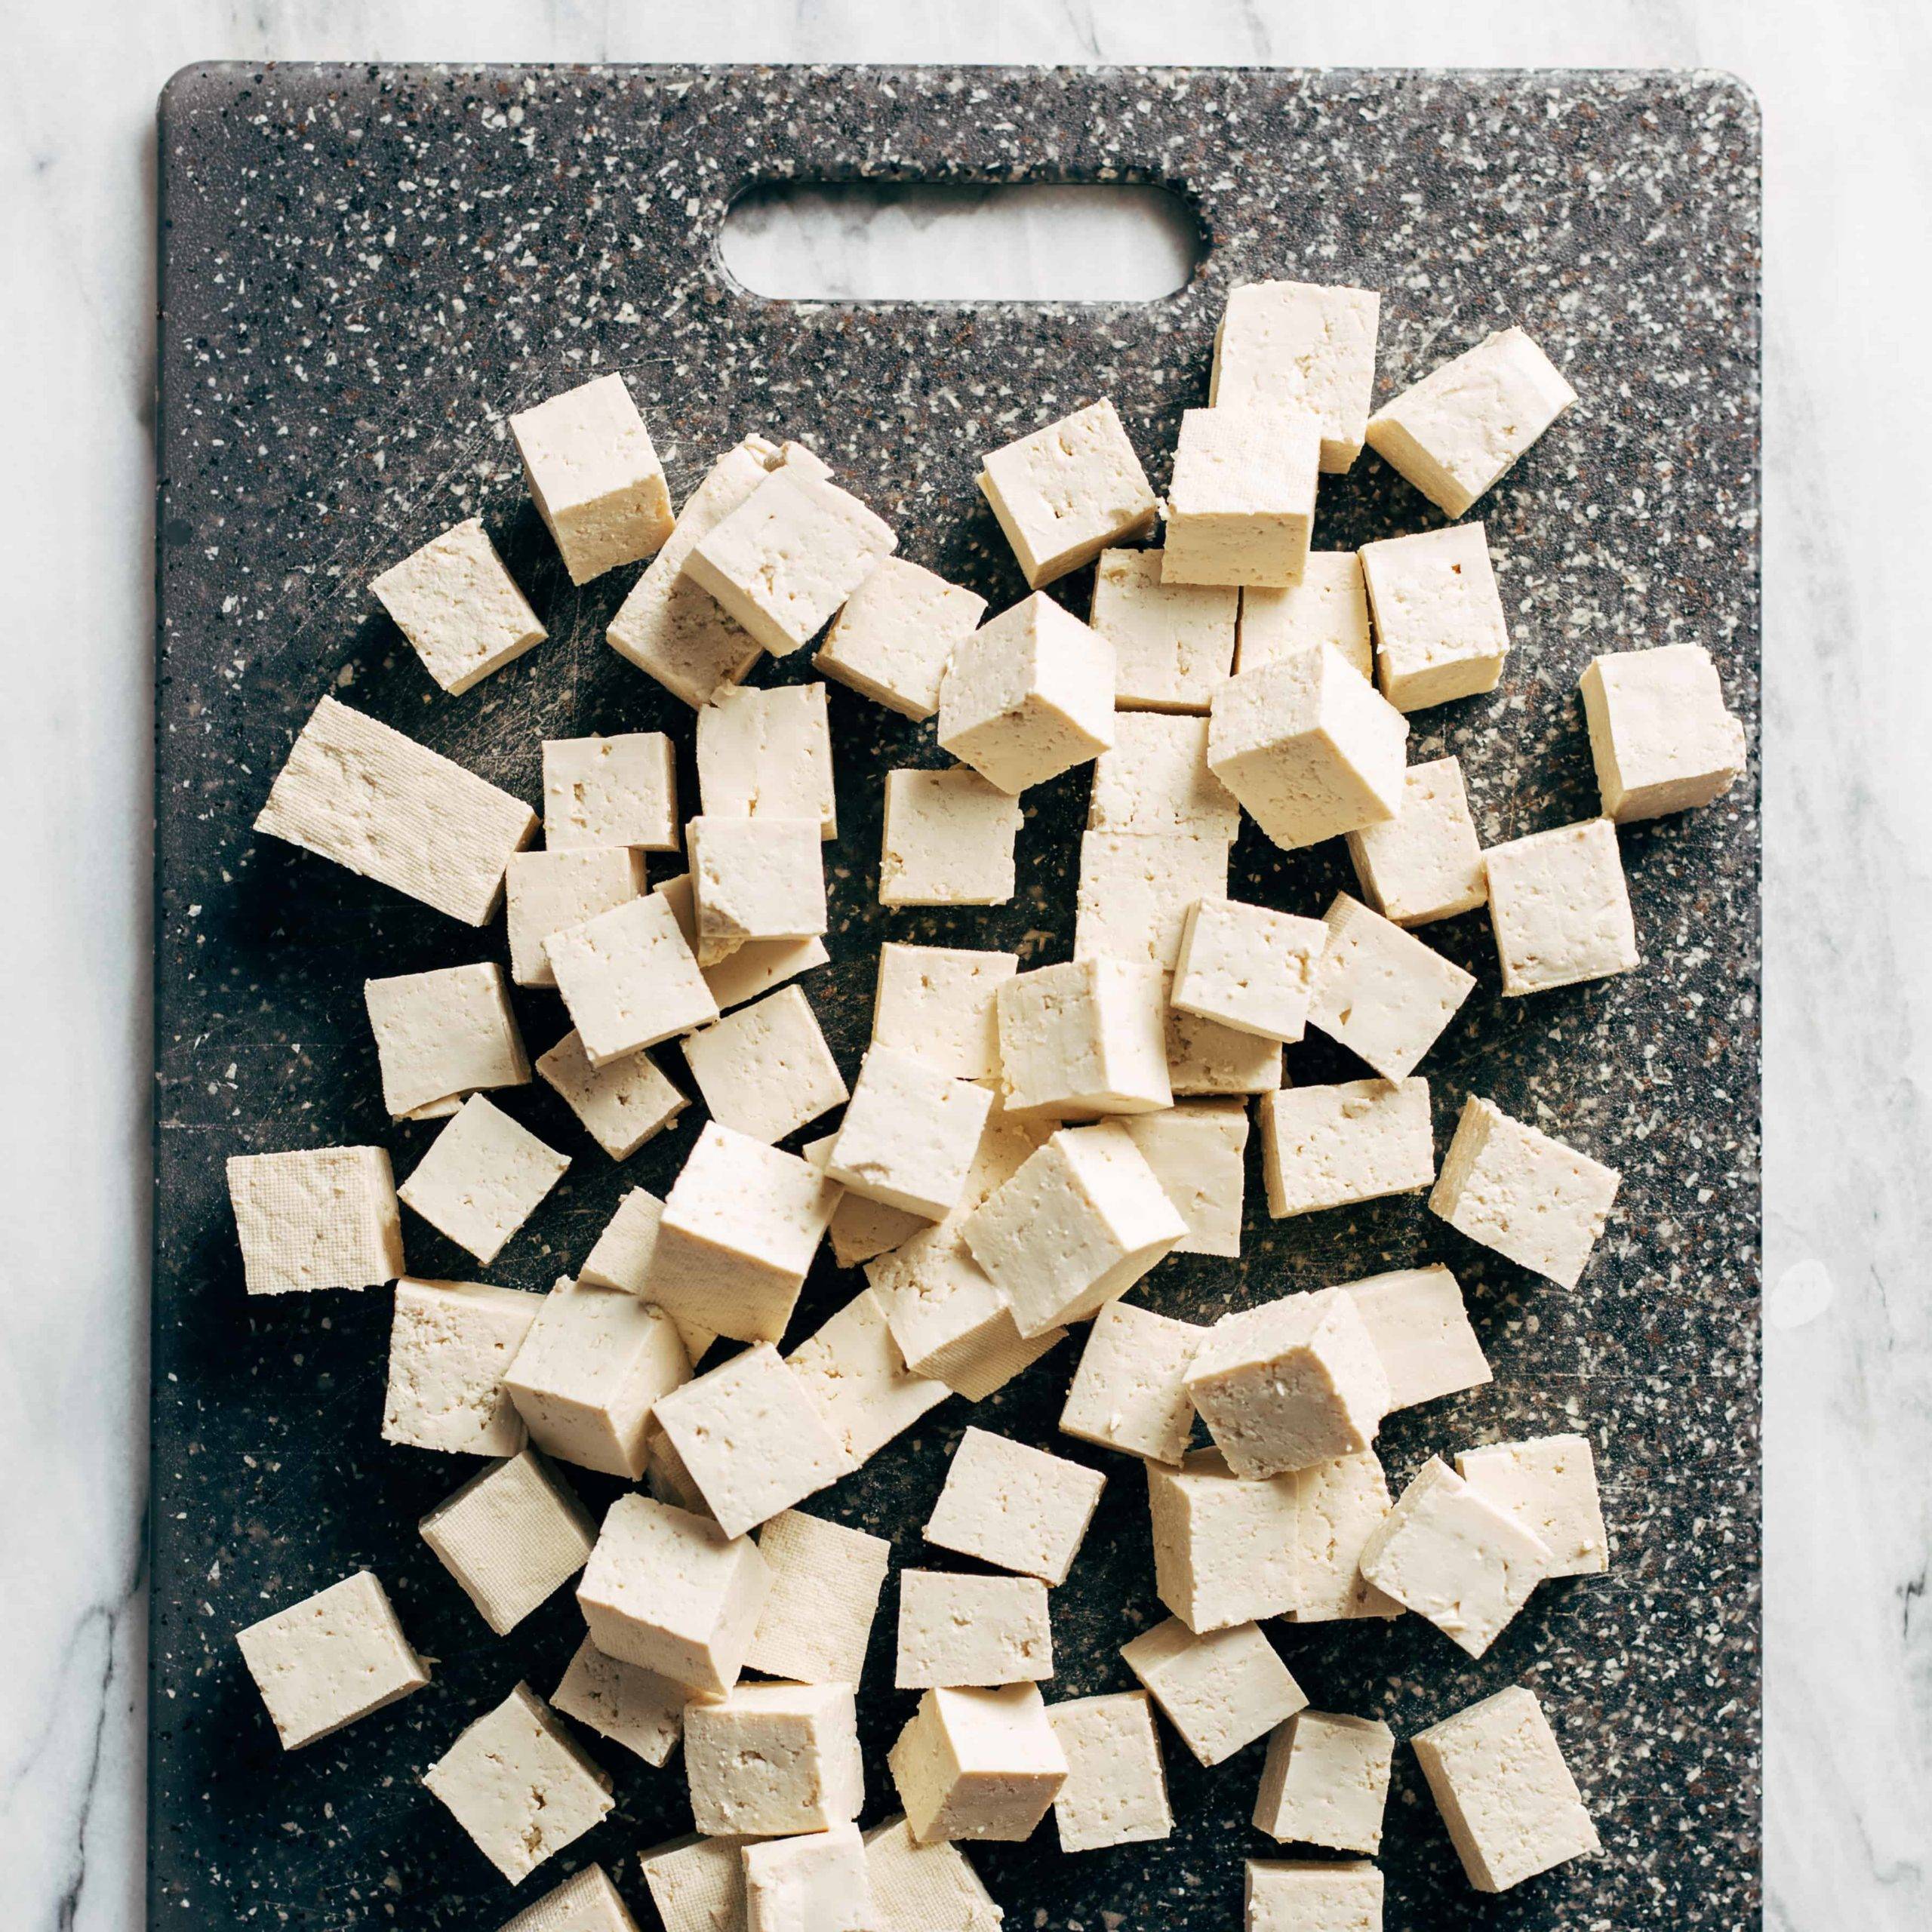 Cubed tofu on a cutting board.